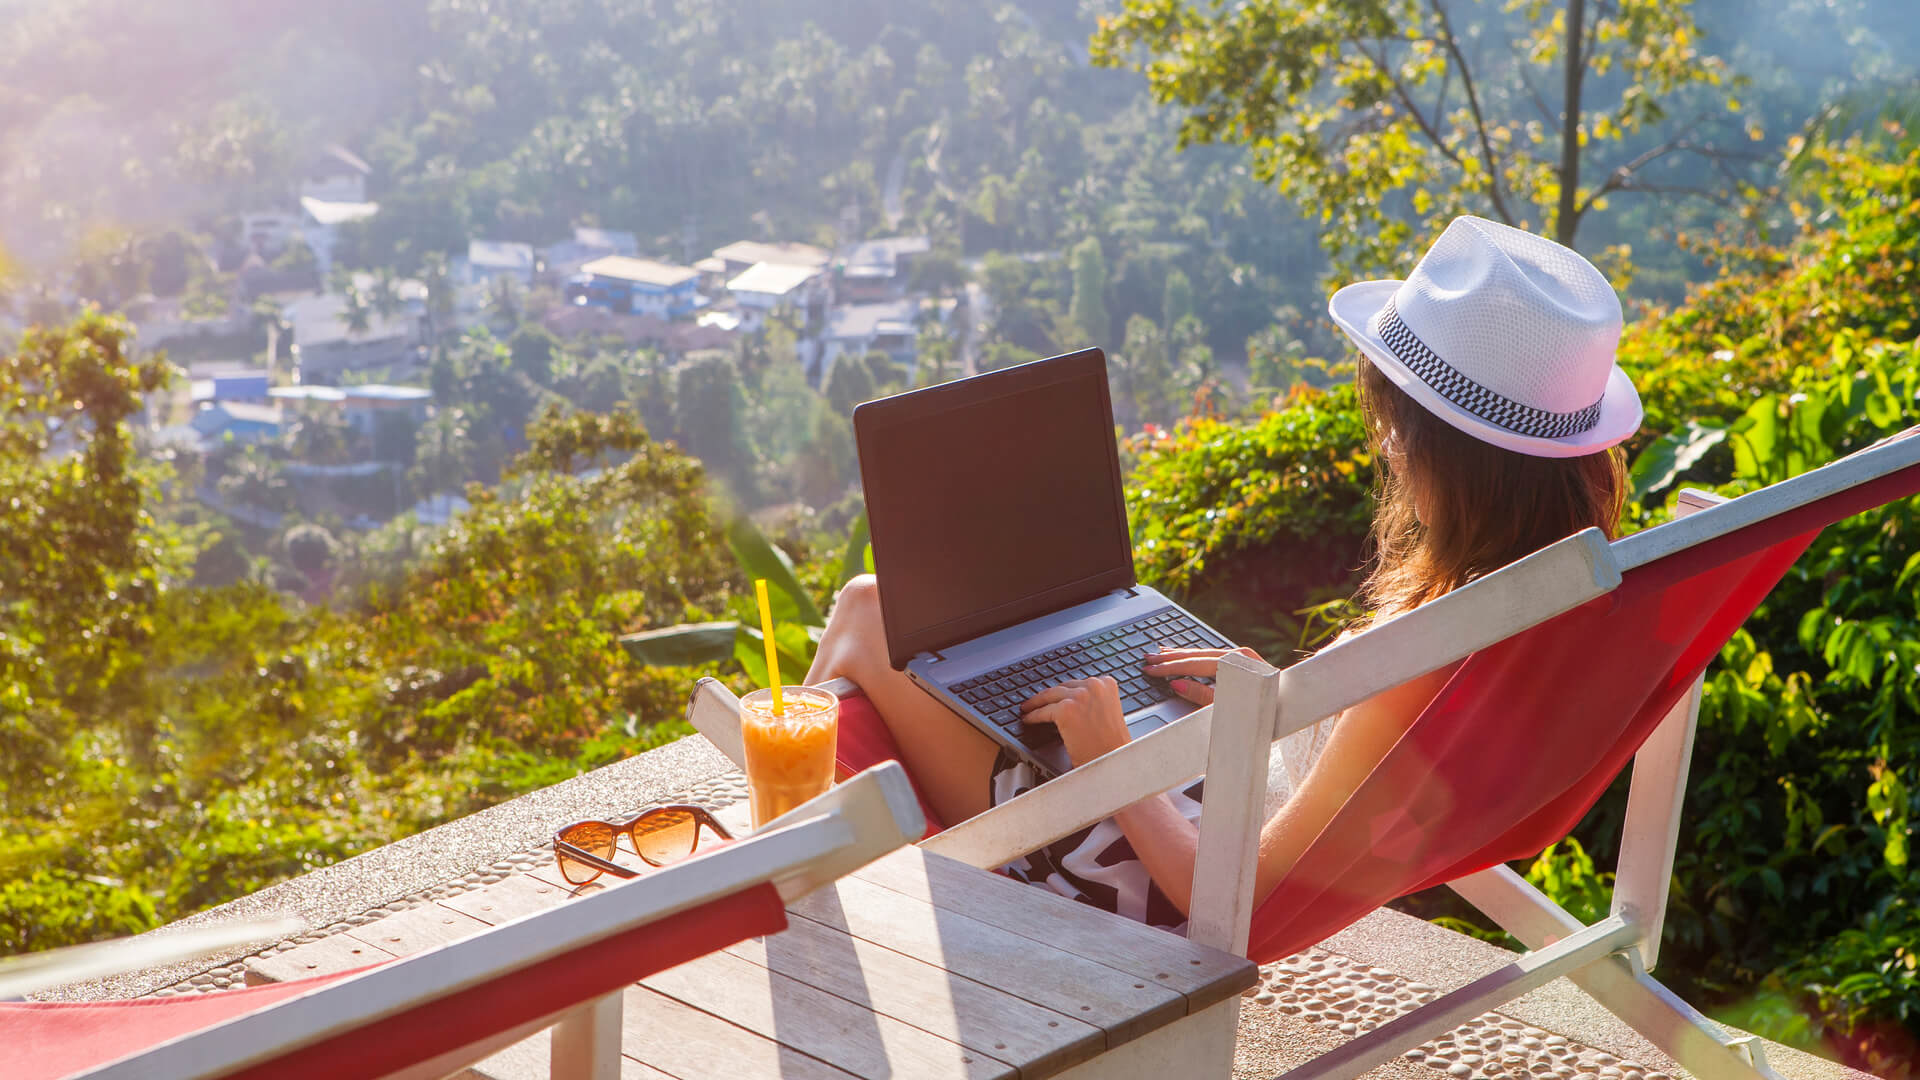 Digital nomad girl making billions on her laptop.